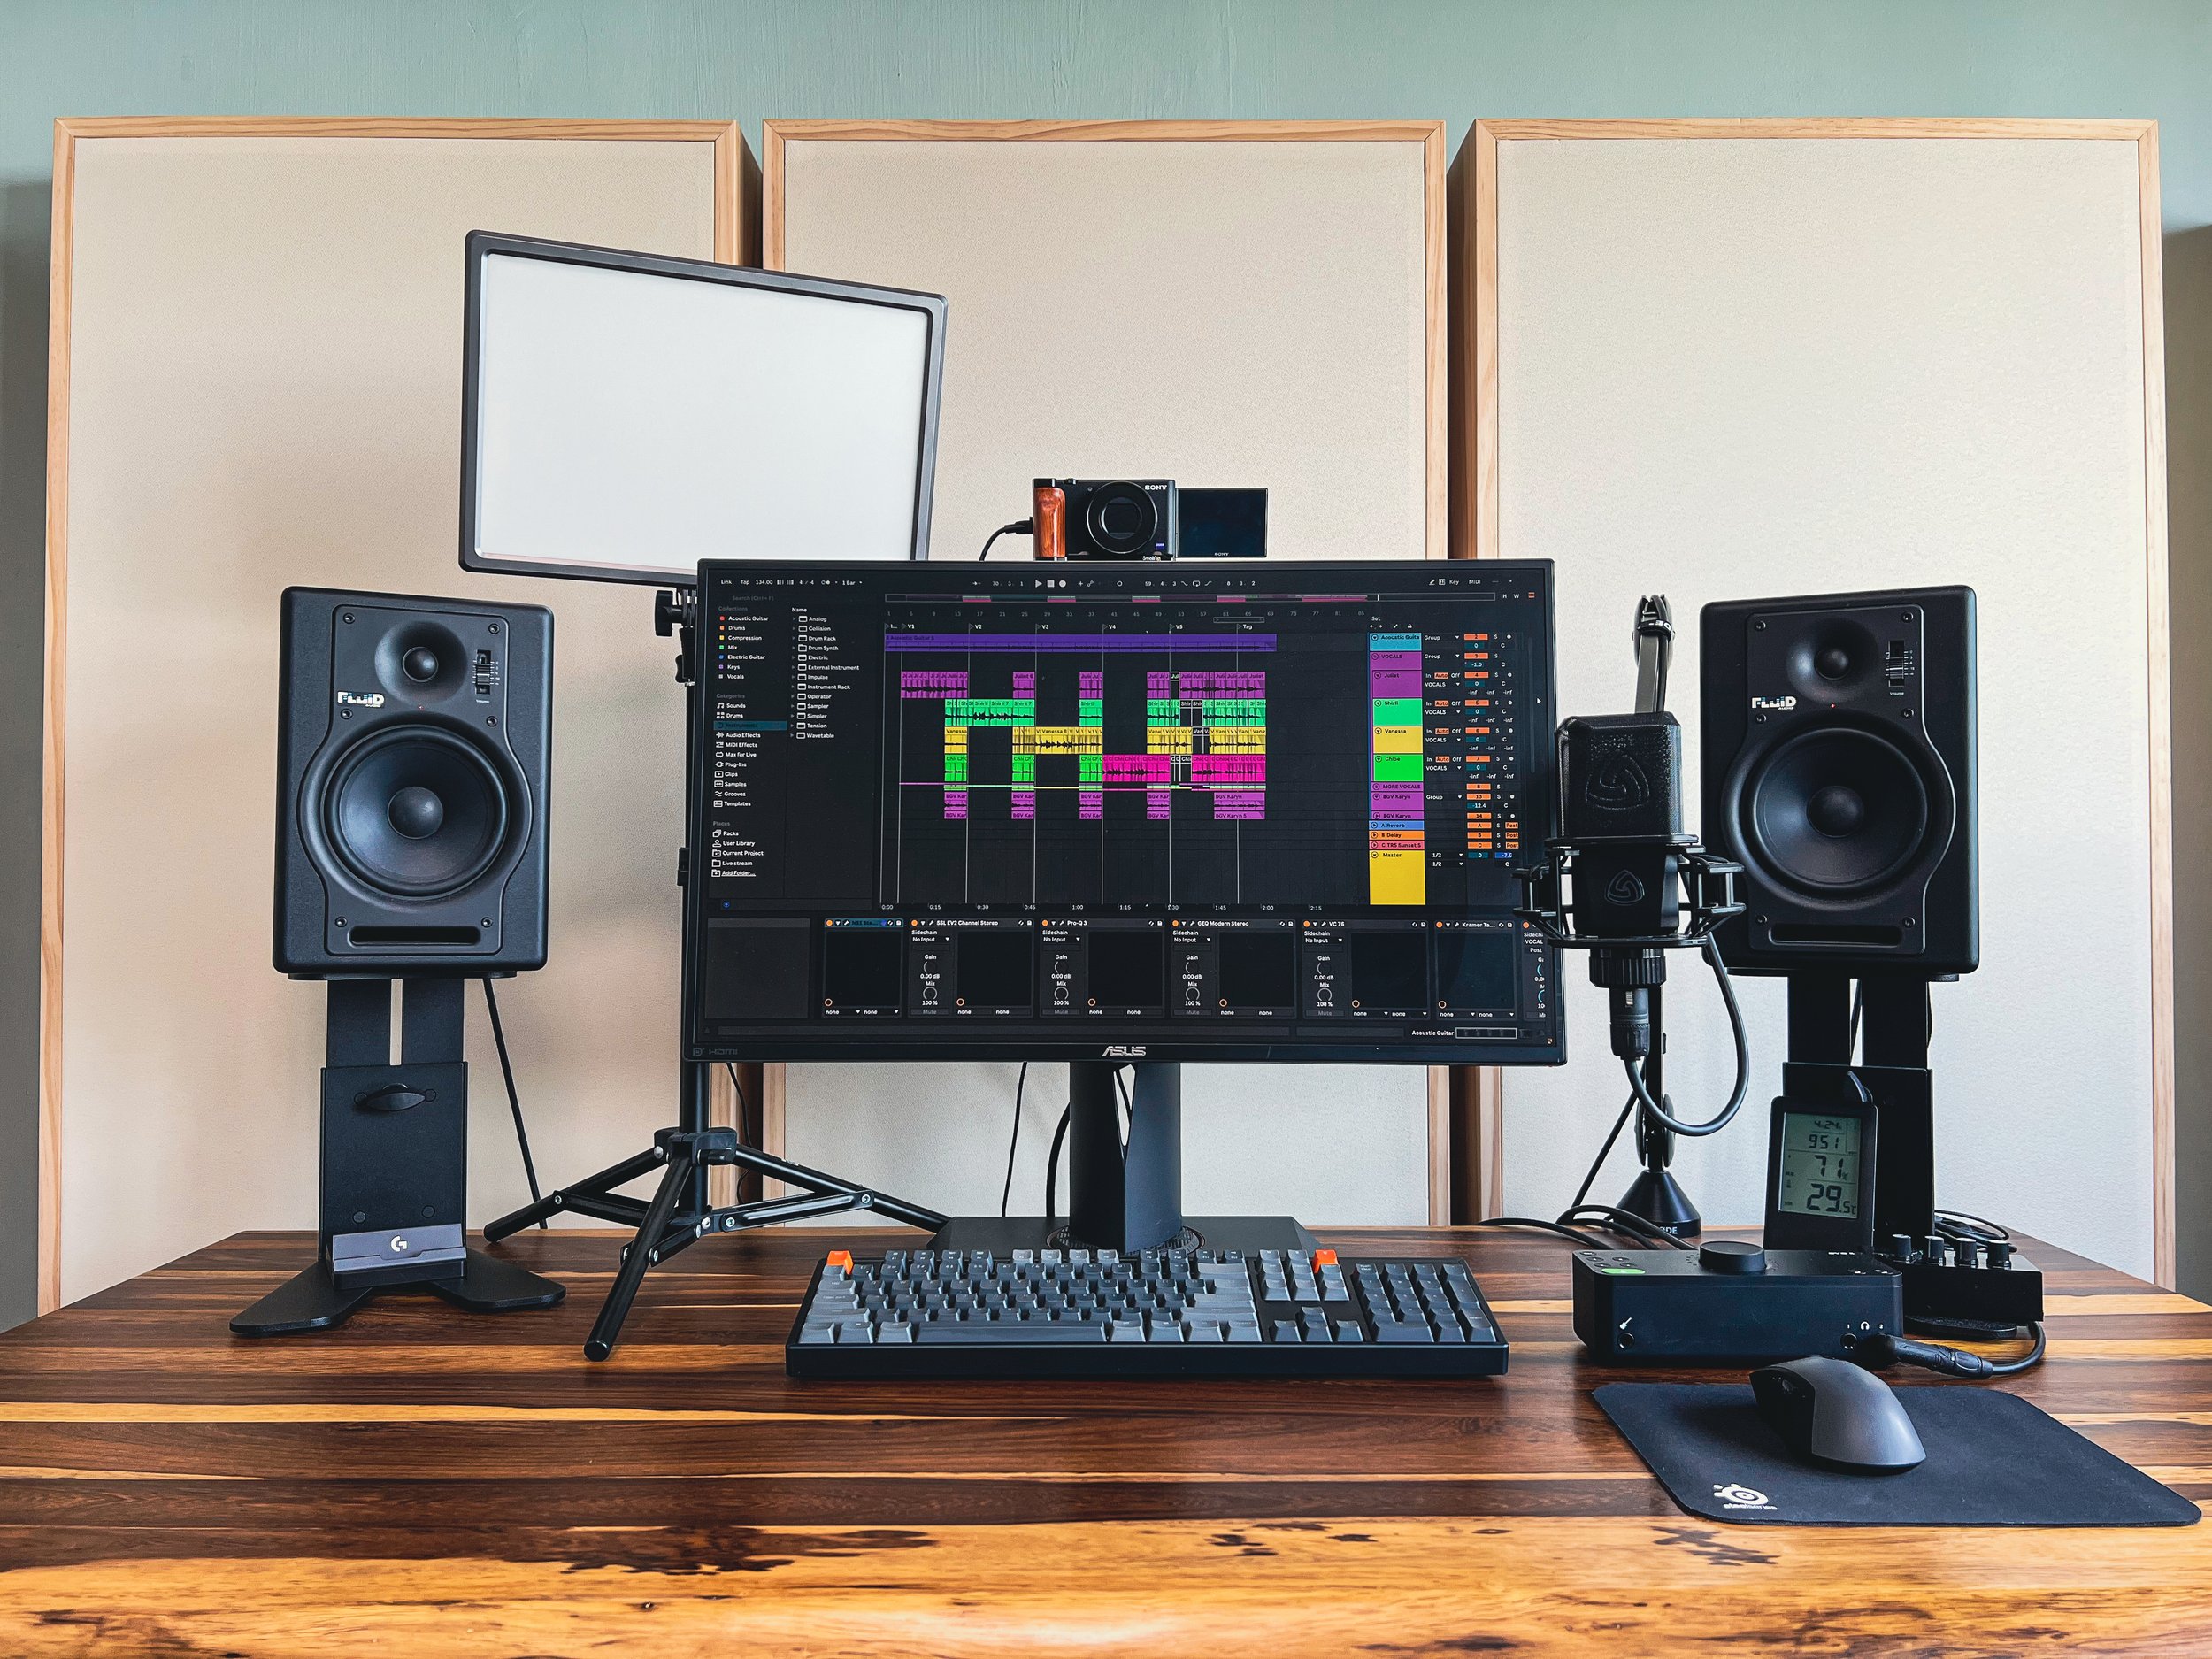 Home studio vs Pro studio  Professional recording studio setup